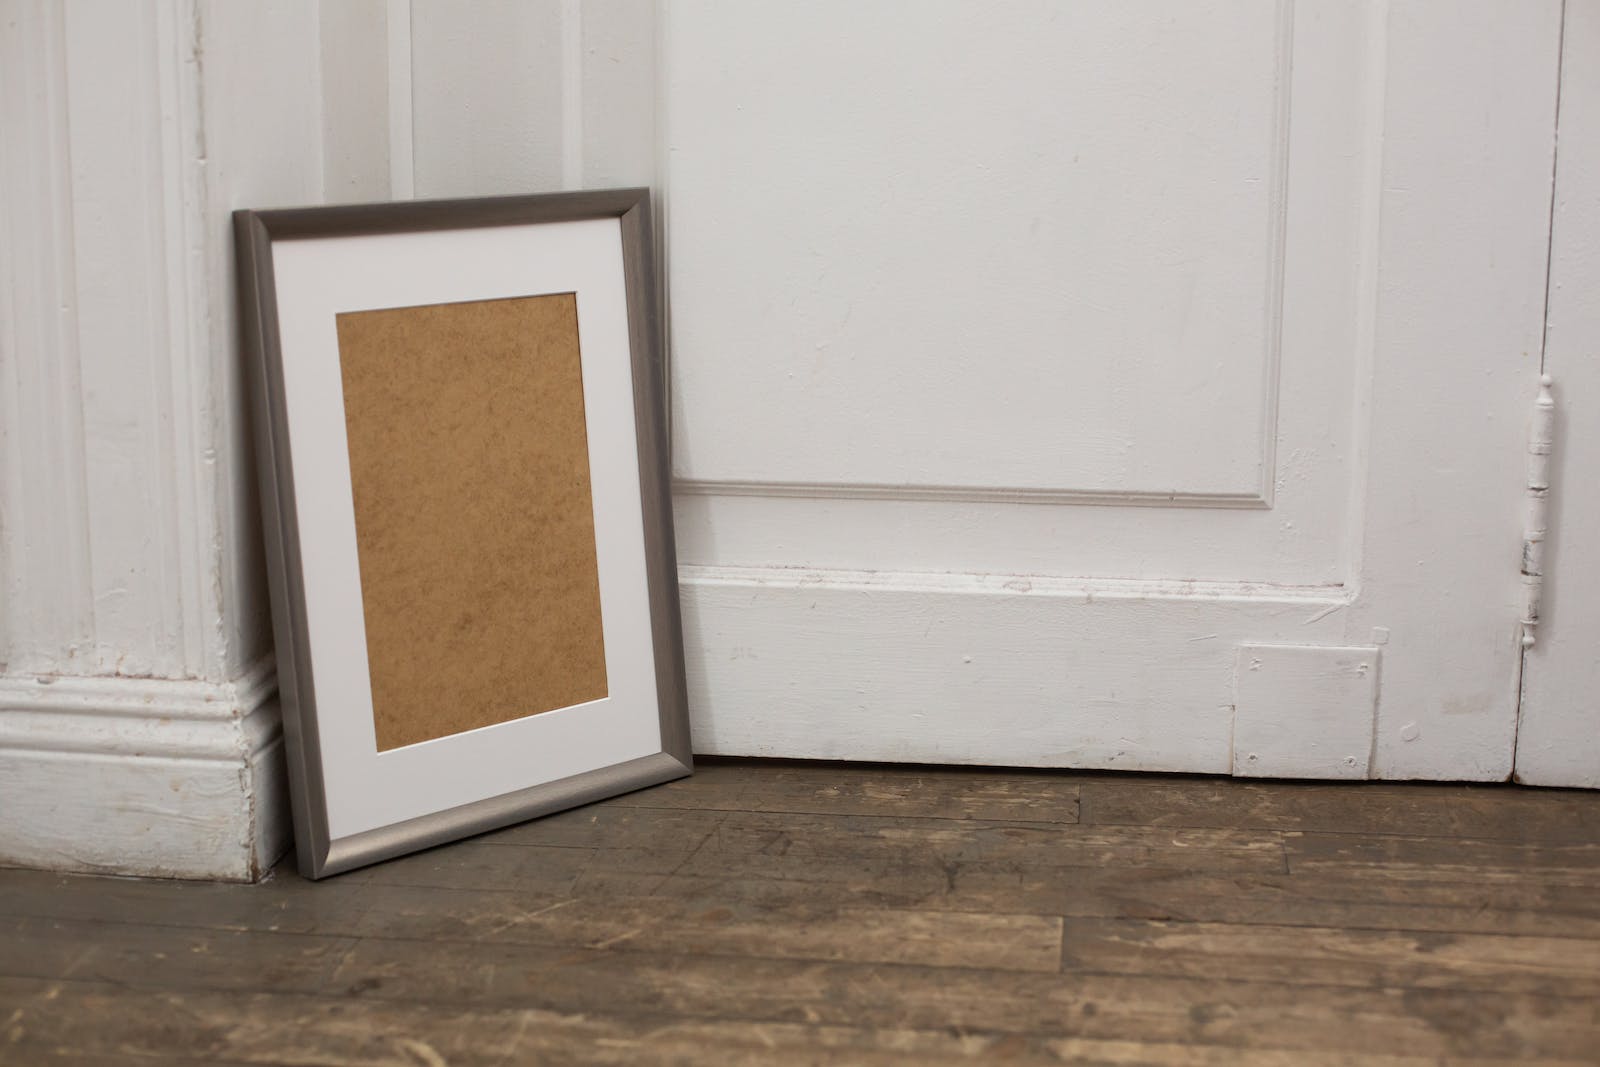 Empty carton frame placed on wooden floor near door